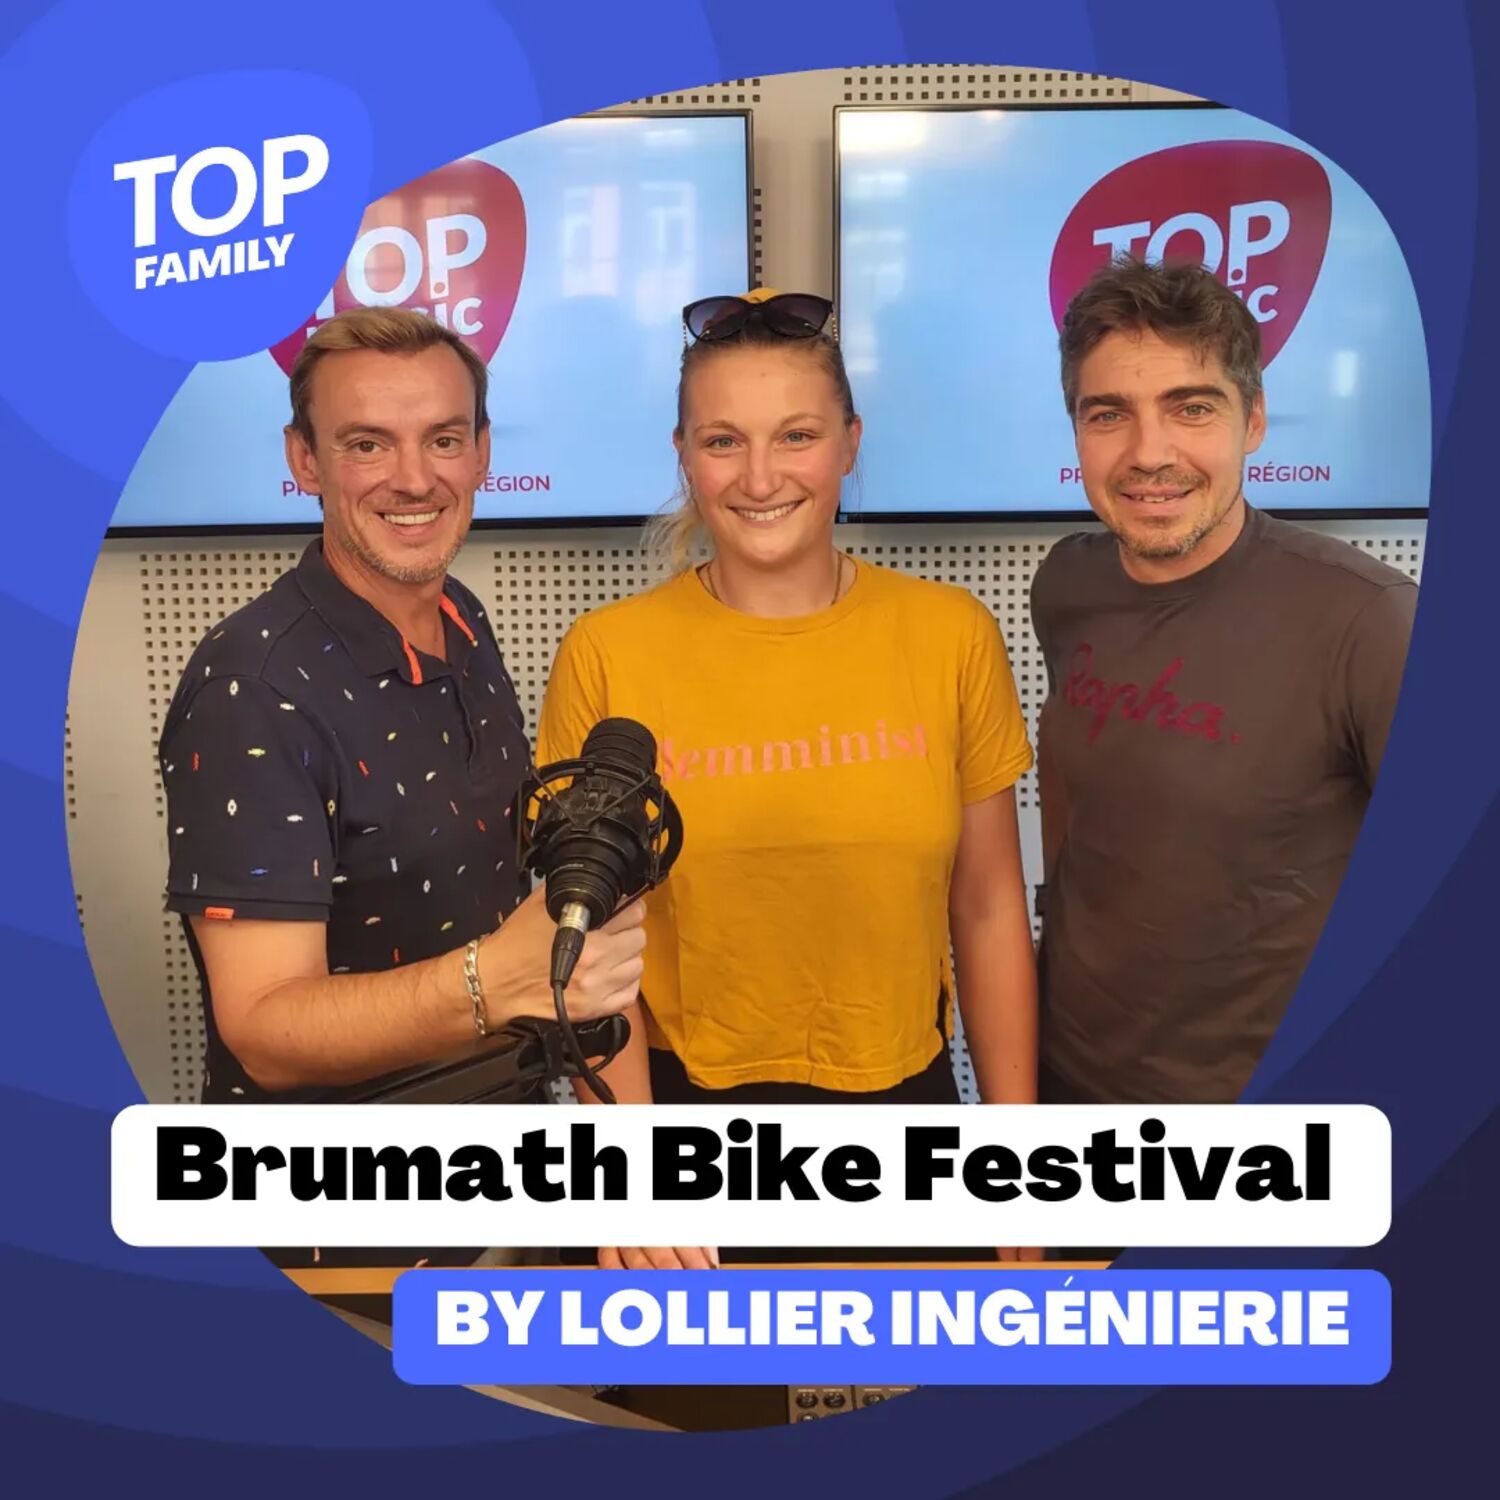 Top Family - Le Brumath Bike Festival by Lollier Ingénierie :...